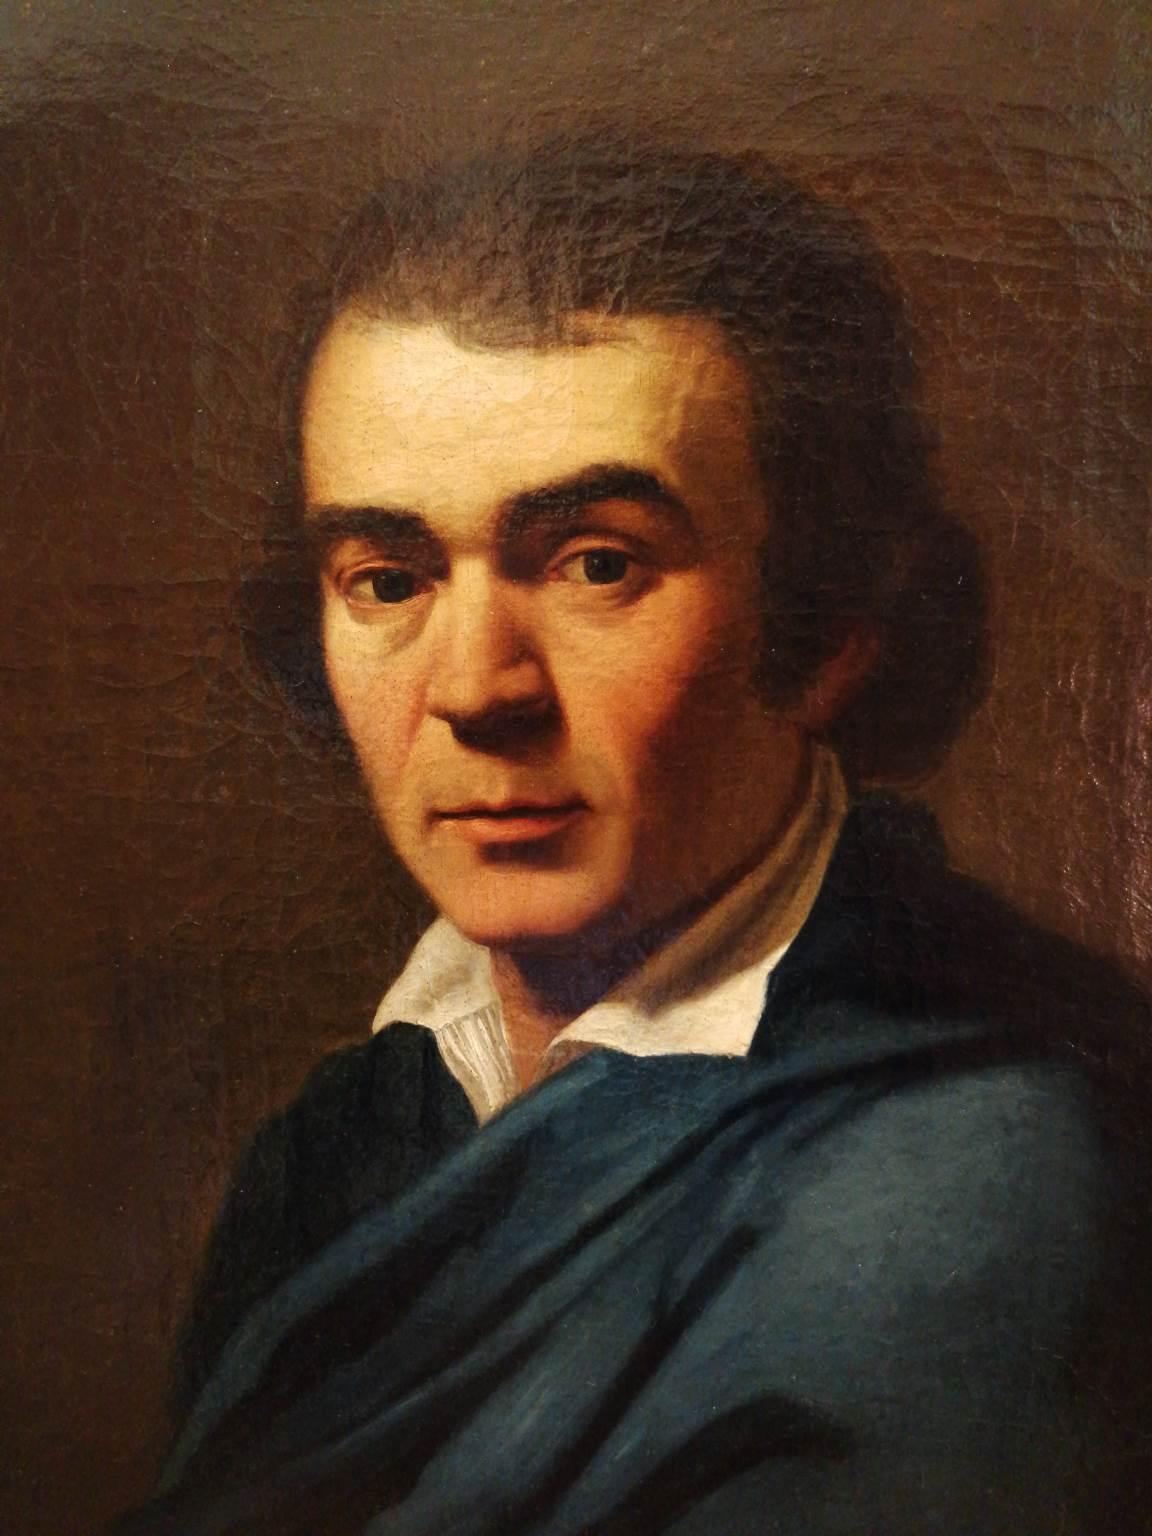 Cuadro retrato firmado G B Dell'Era fechado 1784 lienzo al óleo - Painting de Giovan Battista dell'Era